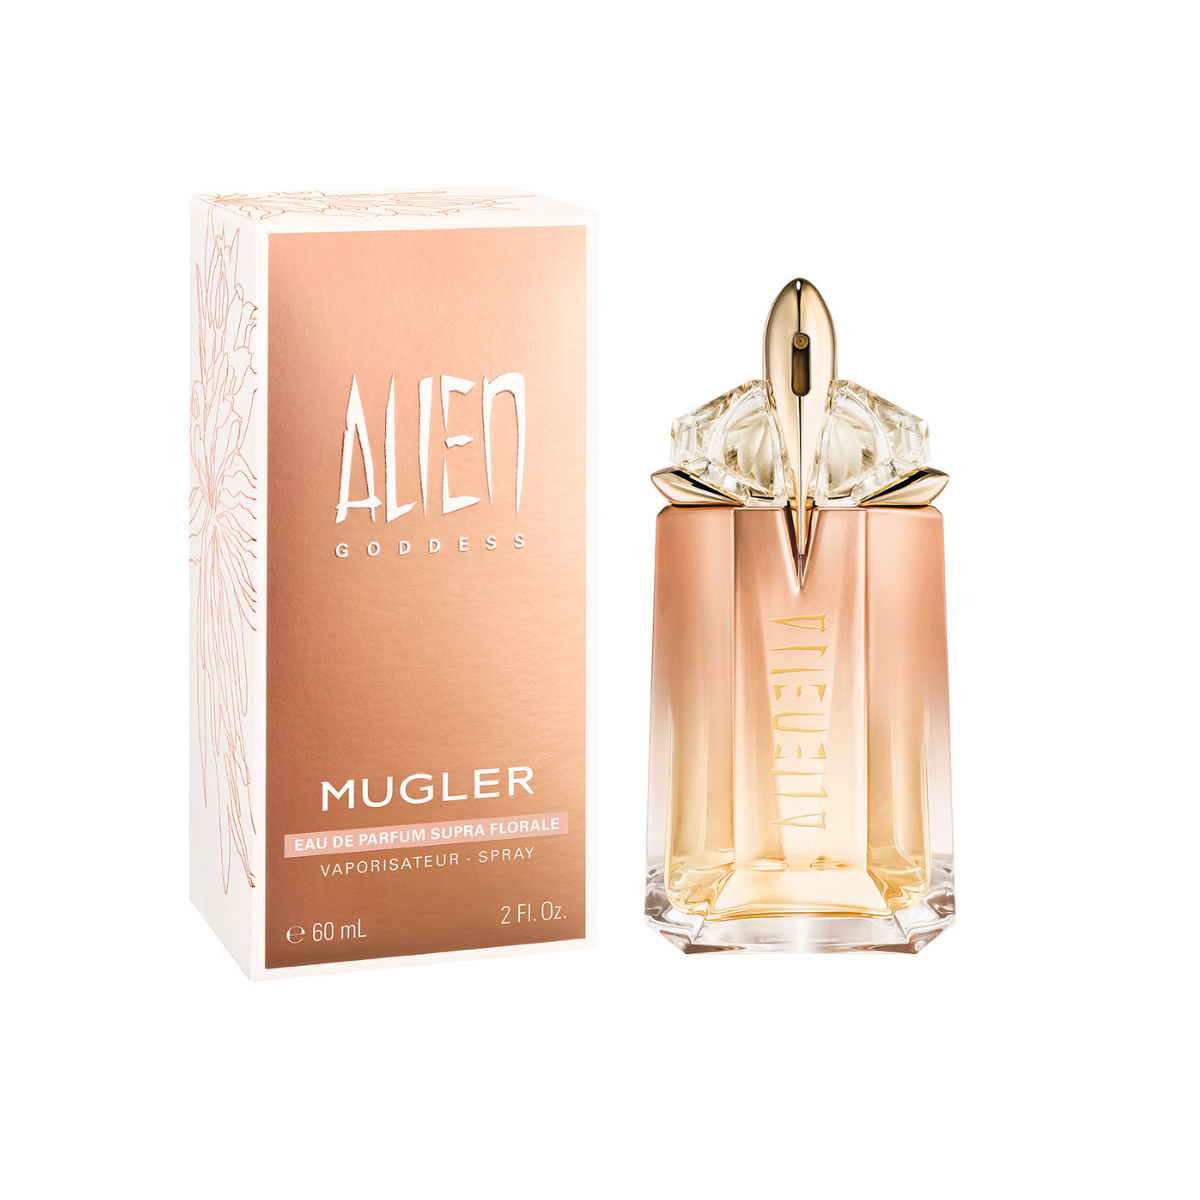 Mugler Alien Goddess Supra Florale Eau de Parfum